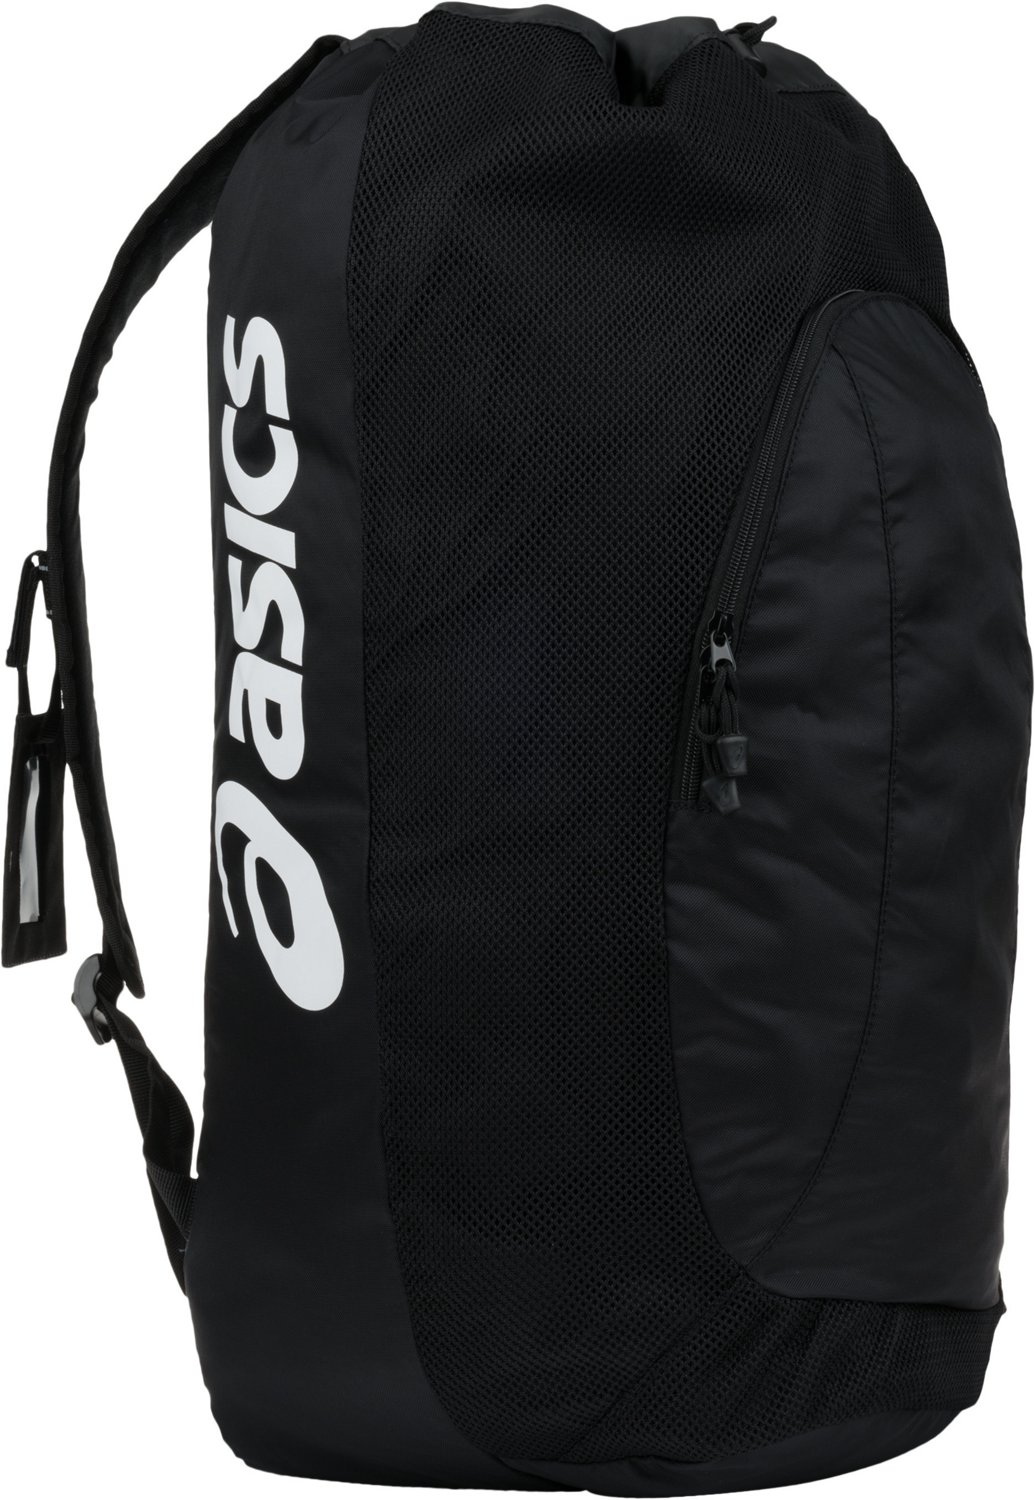 asics gear bag